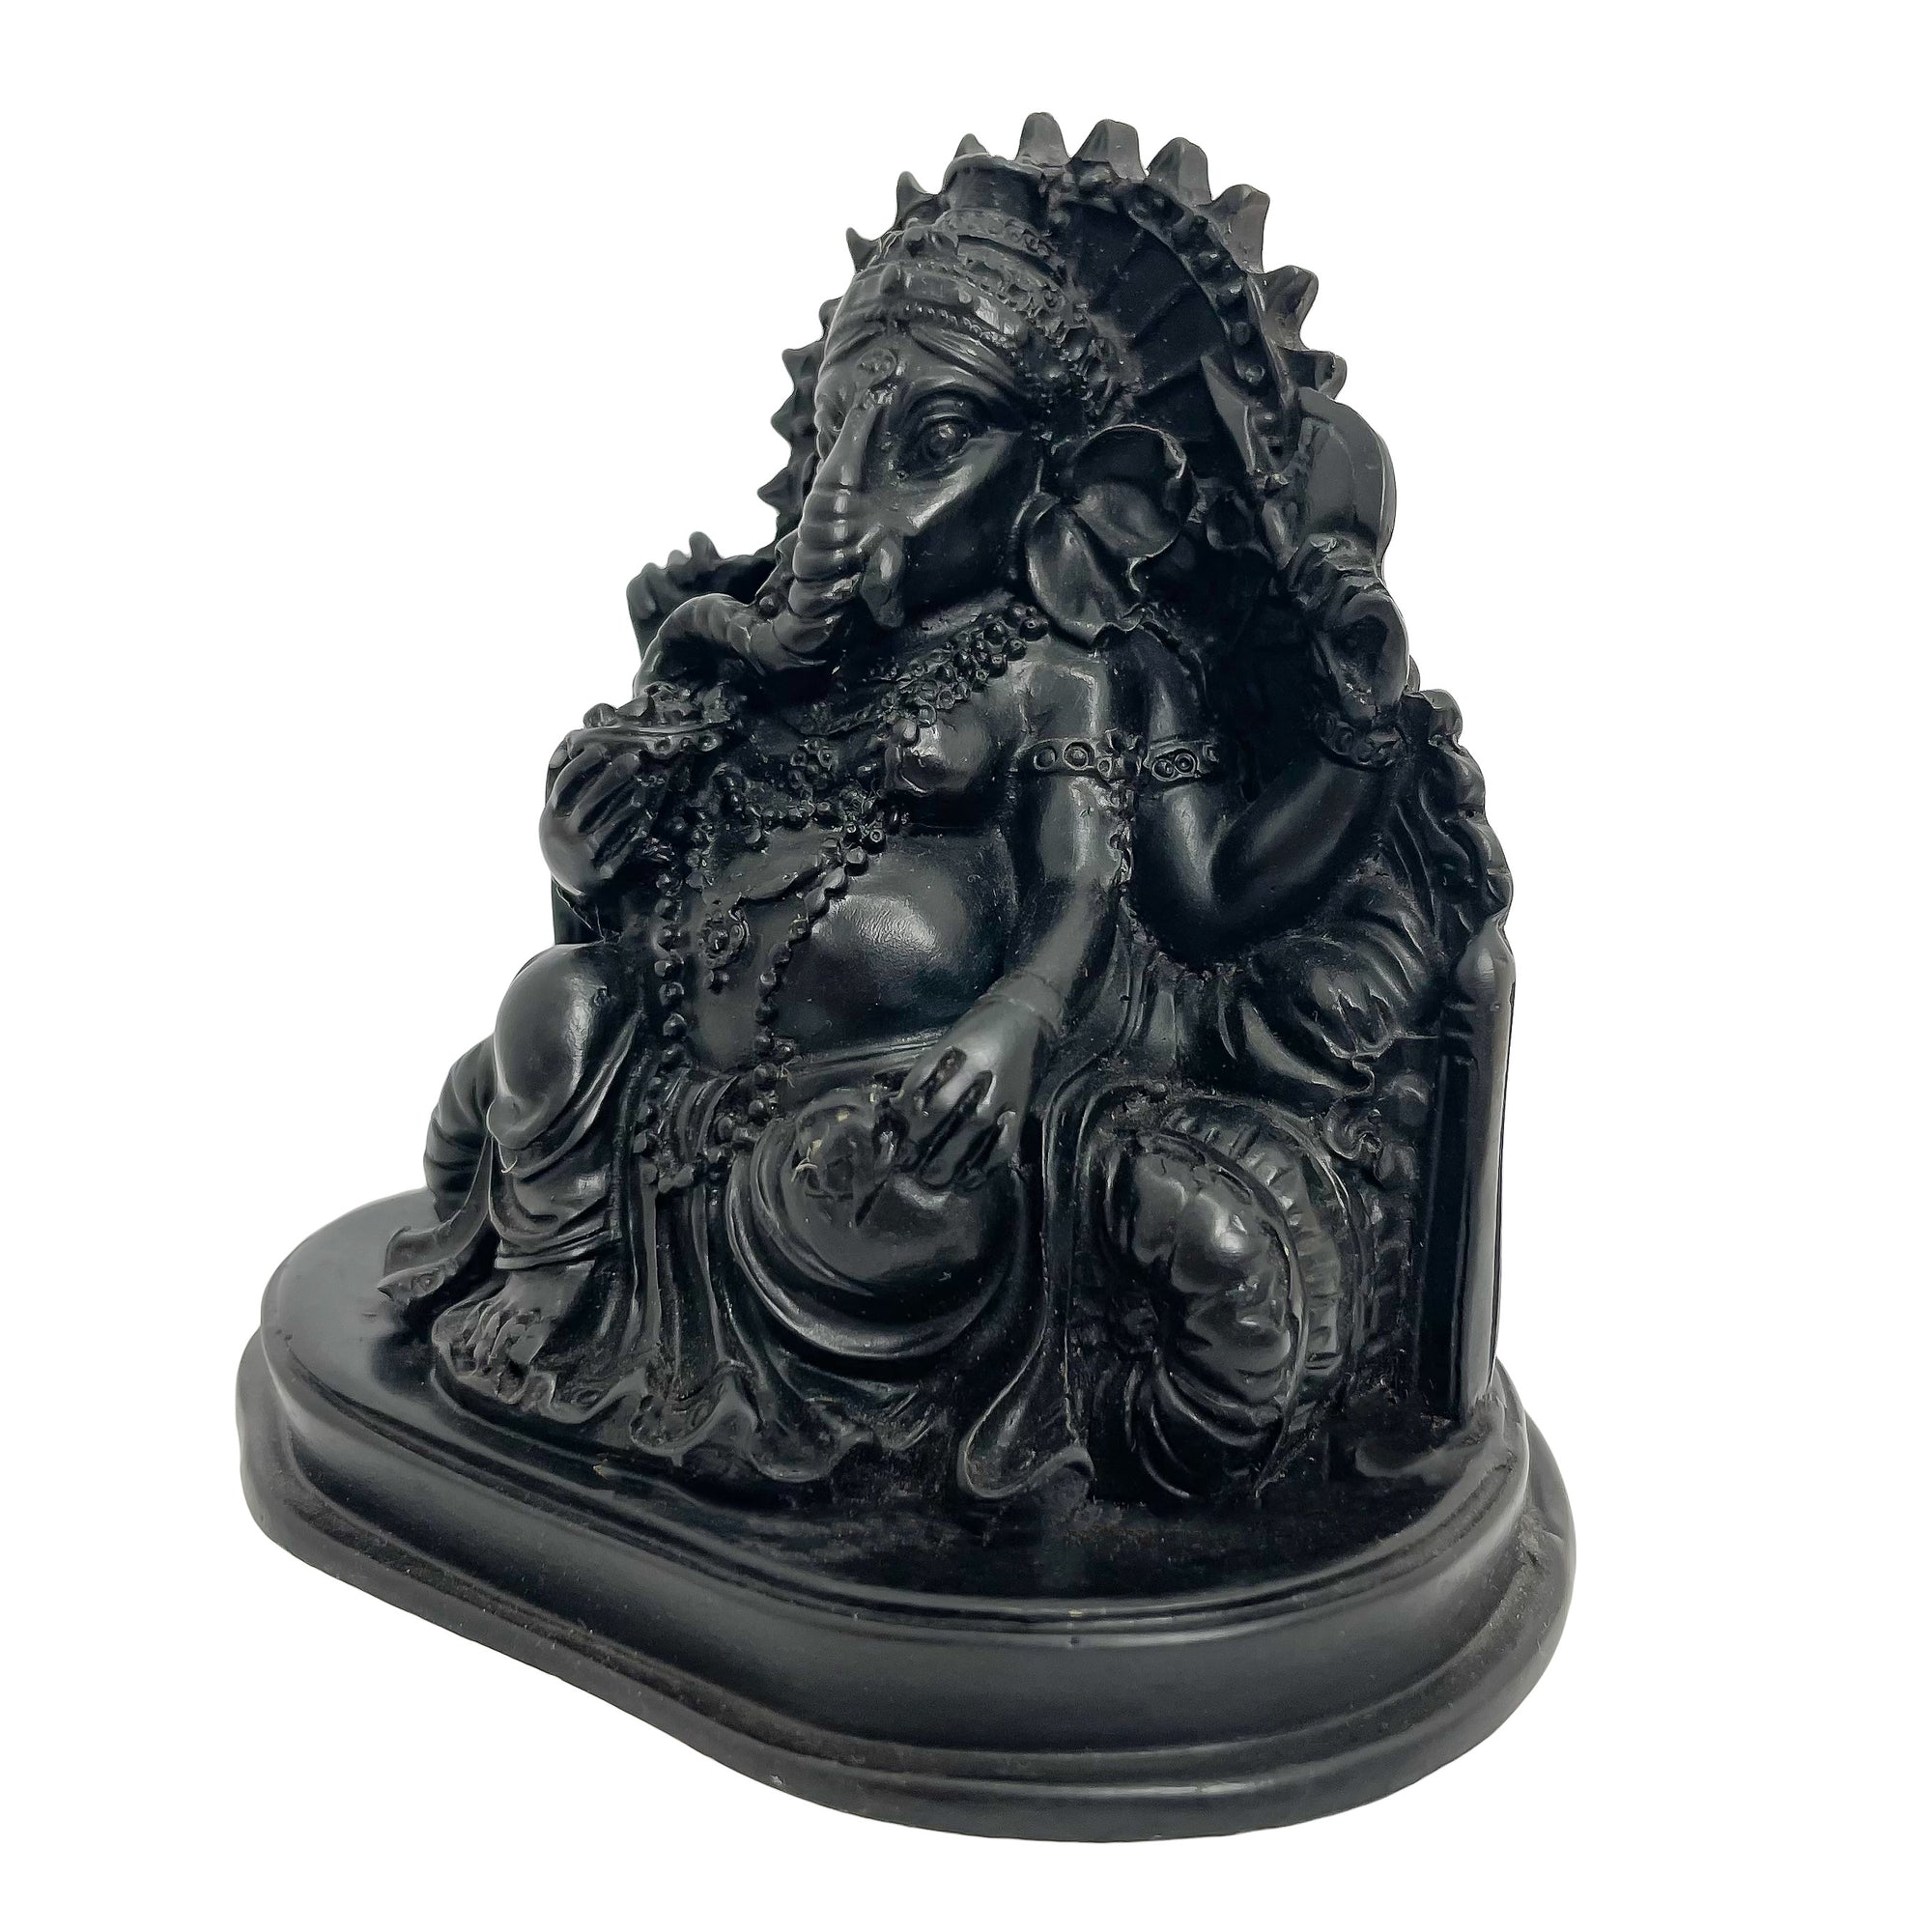 Ganesha Eating Sweets Black Resin Statue